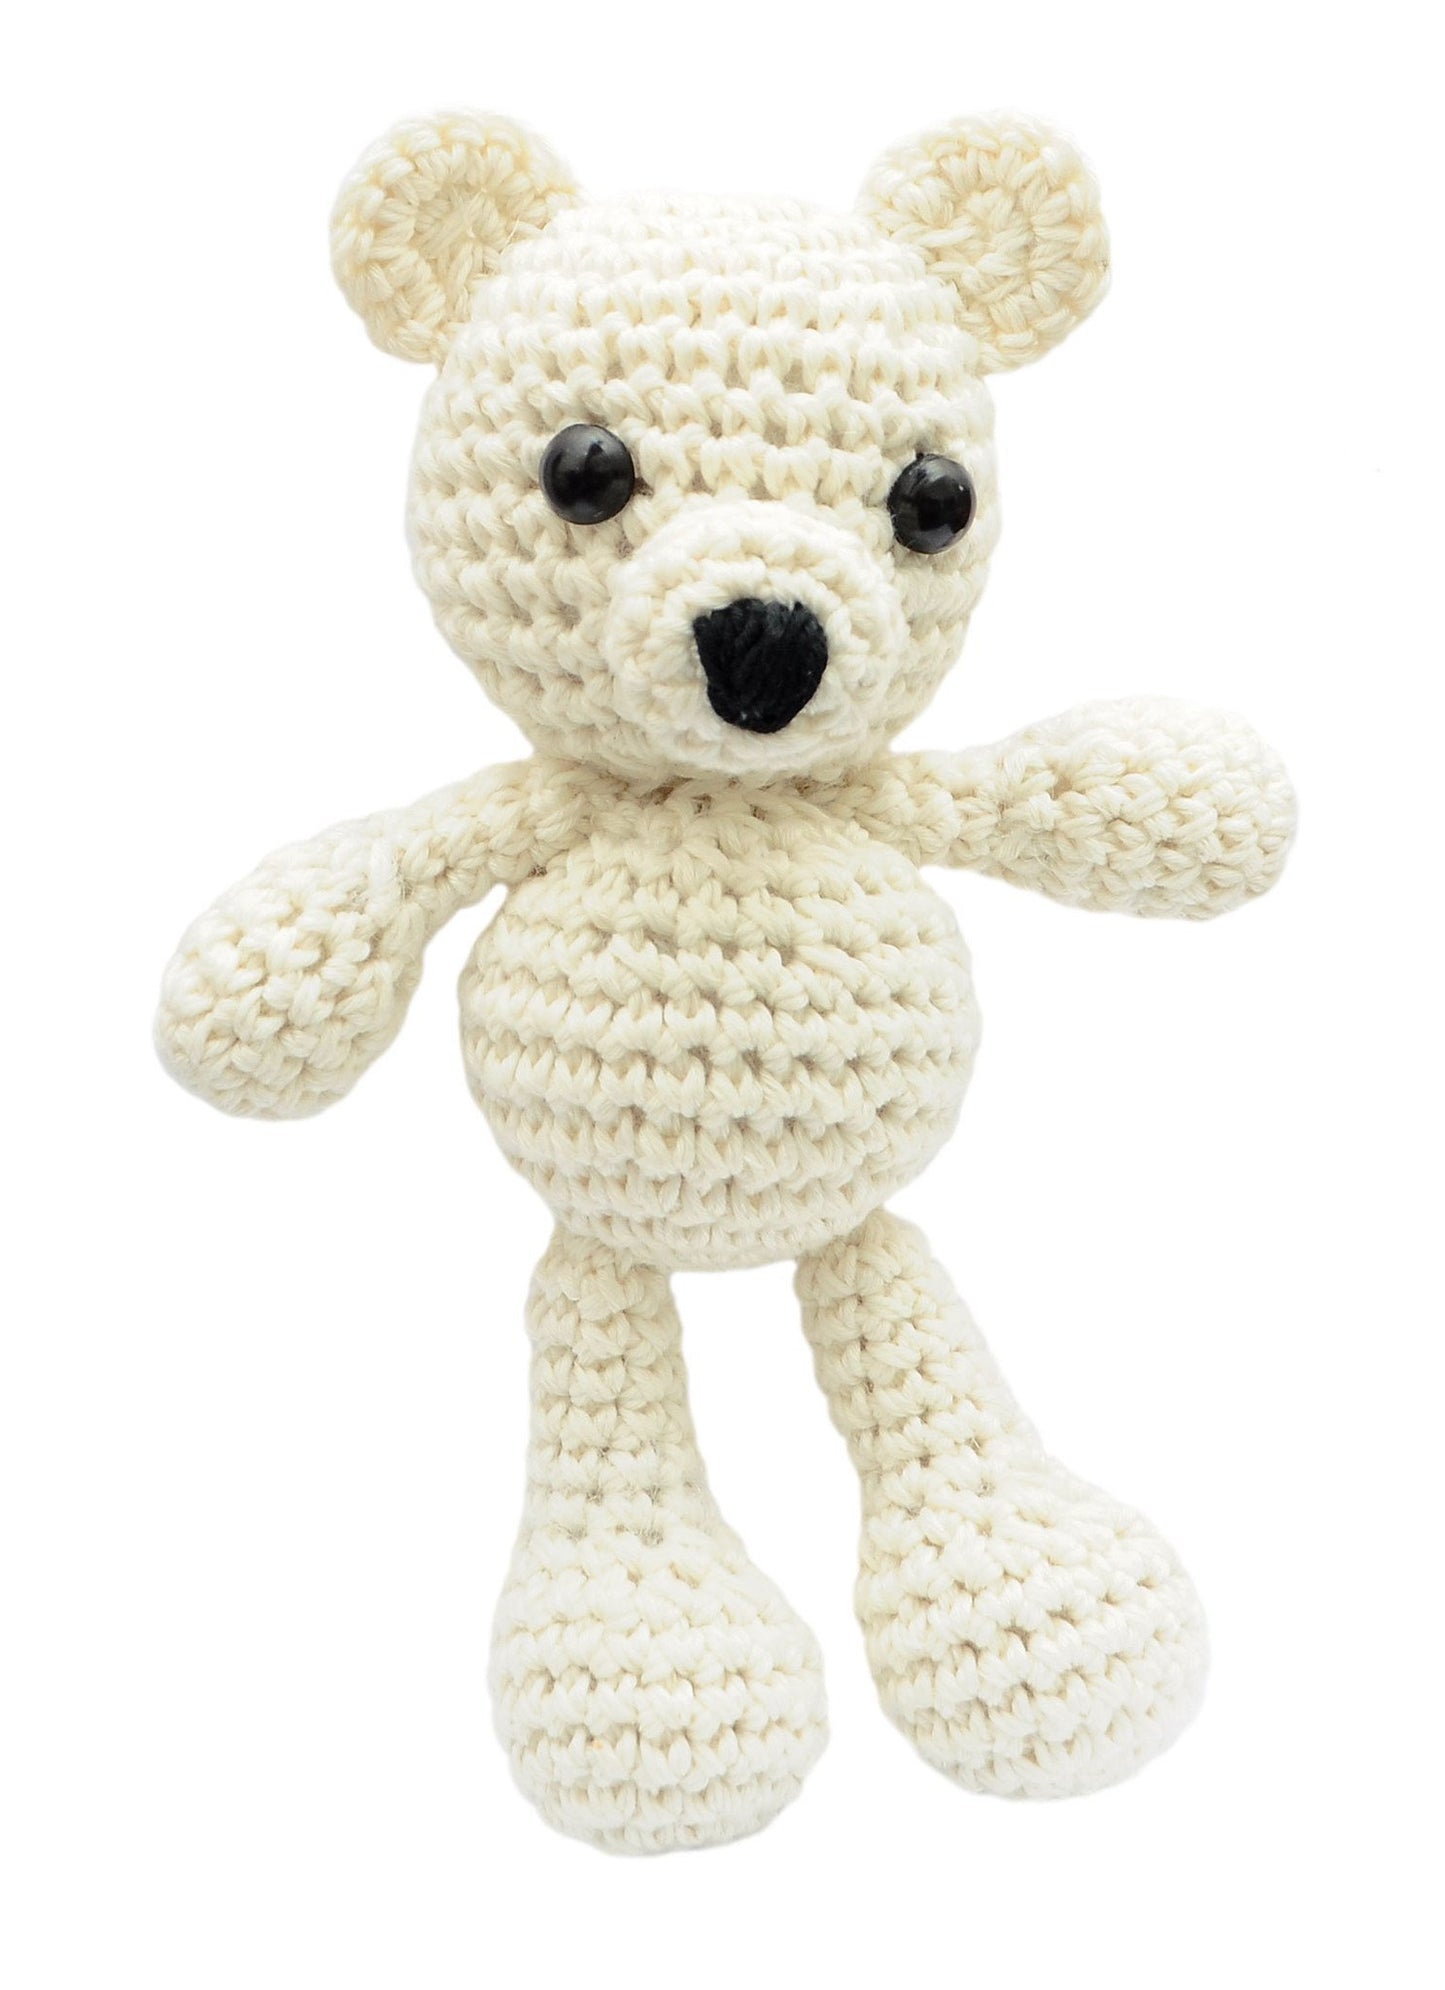 White Puppy Handmade Amigurumi Stuffed Toy Knit Crochet Doll VAC